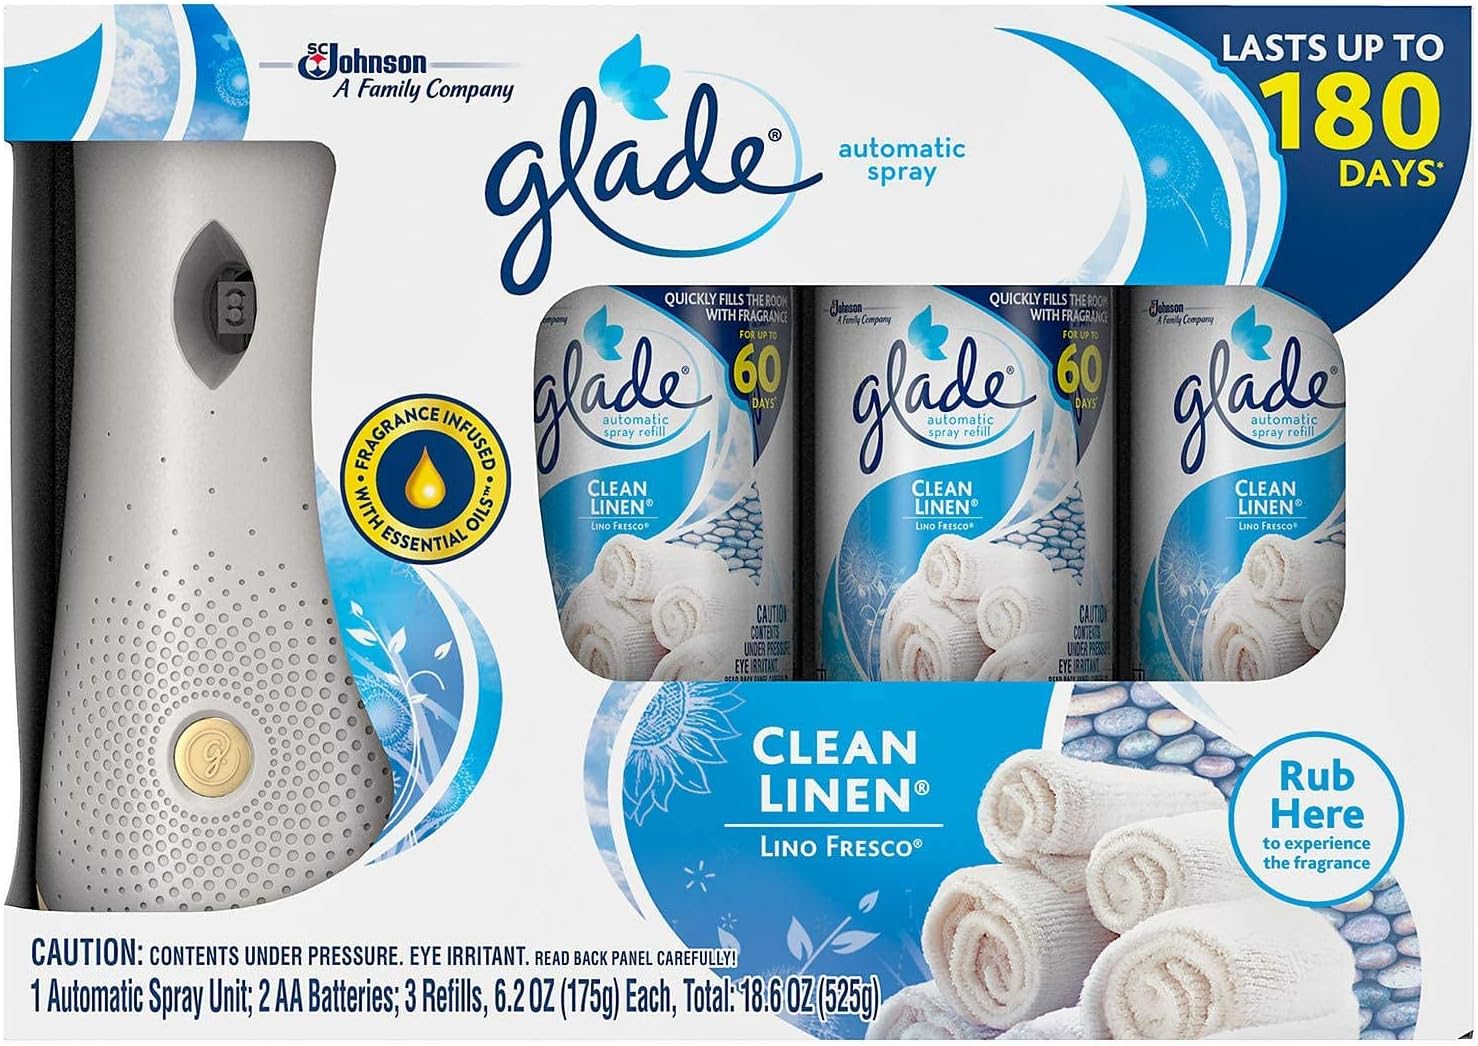 Glade Automatic Spray Air Freshener 1 Holder + 3 Refills - Clean Linen